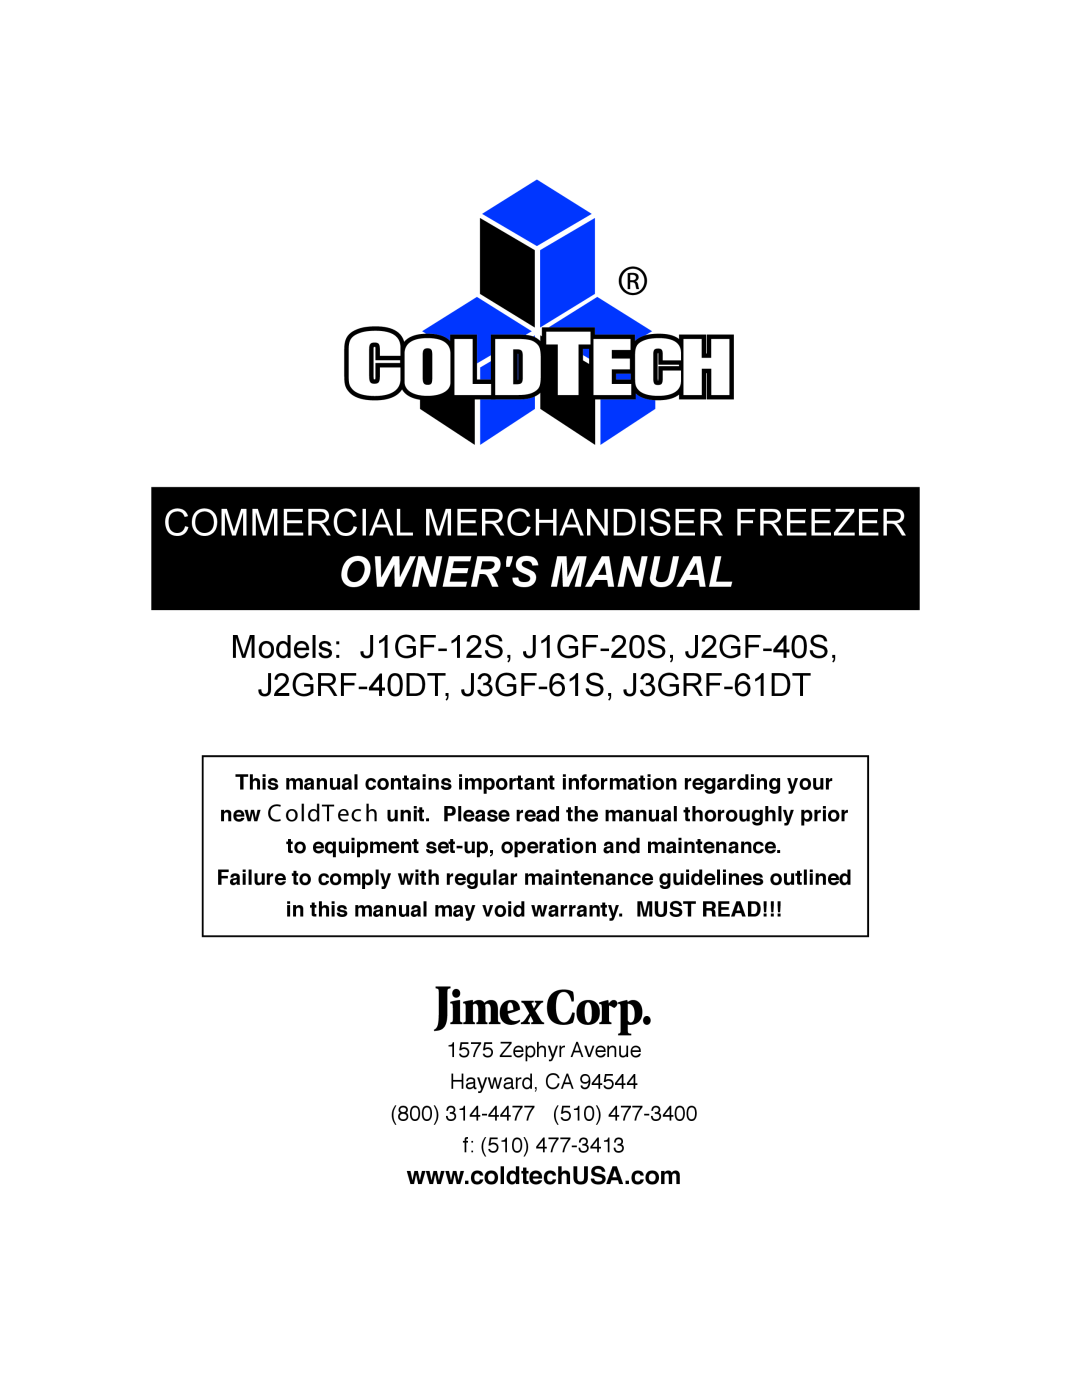 ColdTech J3GF-61S, J3GRF-61DT, J2GRF-40DT, J1GF-12S, J2GF-40S, J1GF-20S owner manual Commercial Merchandiser Freezer 